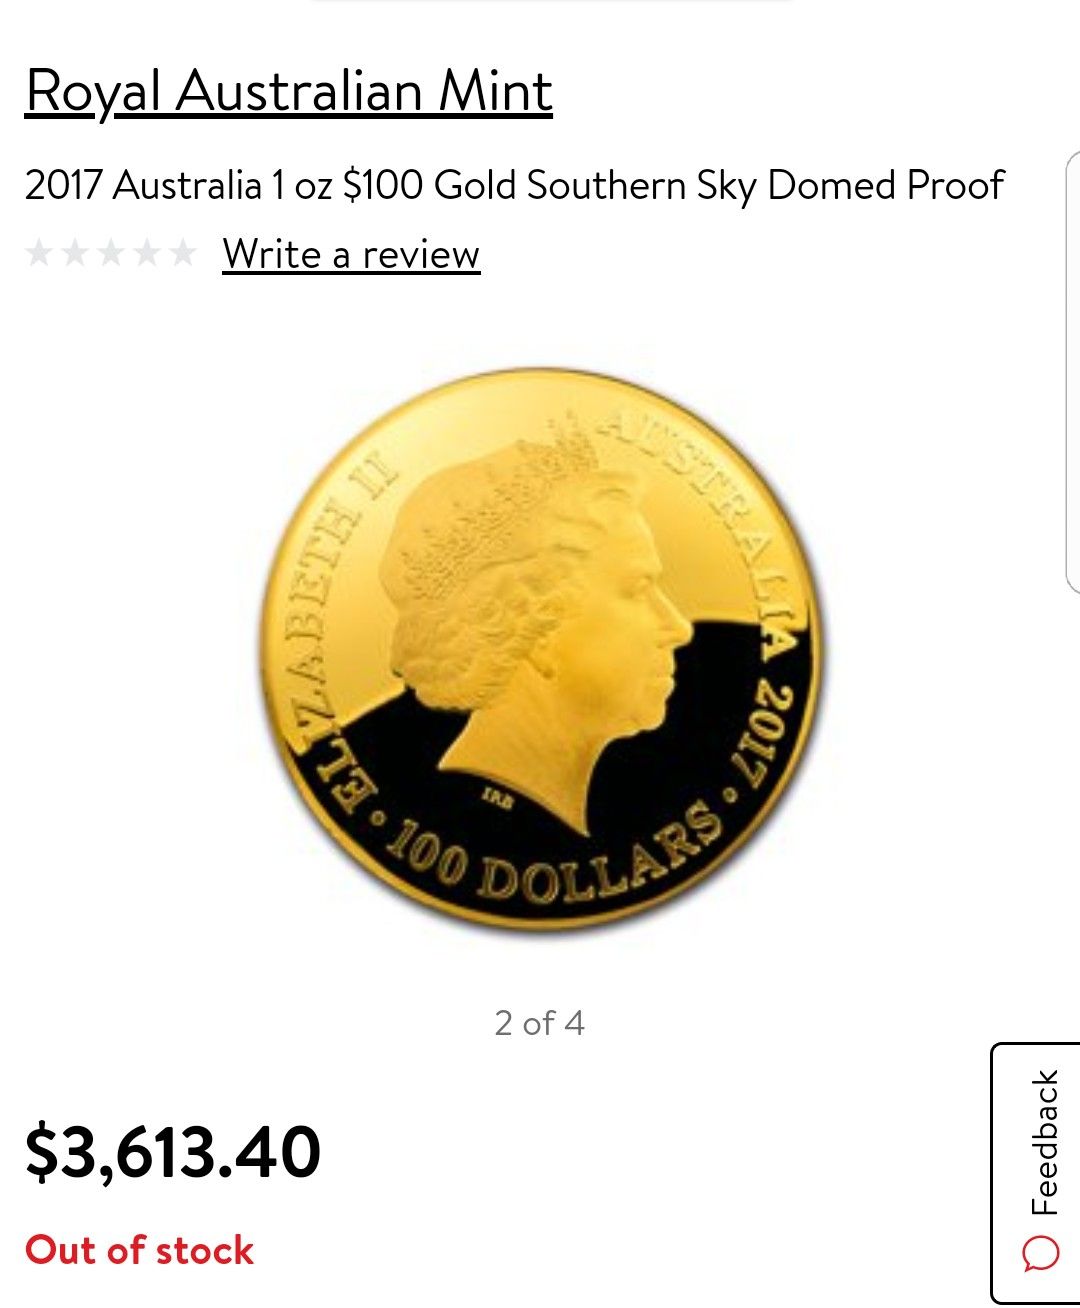 2017 Australia 1 oz $100 Gold Southern Sky Domed Proof